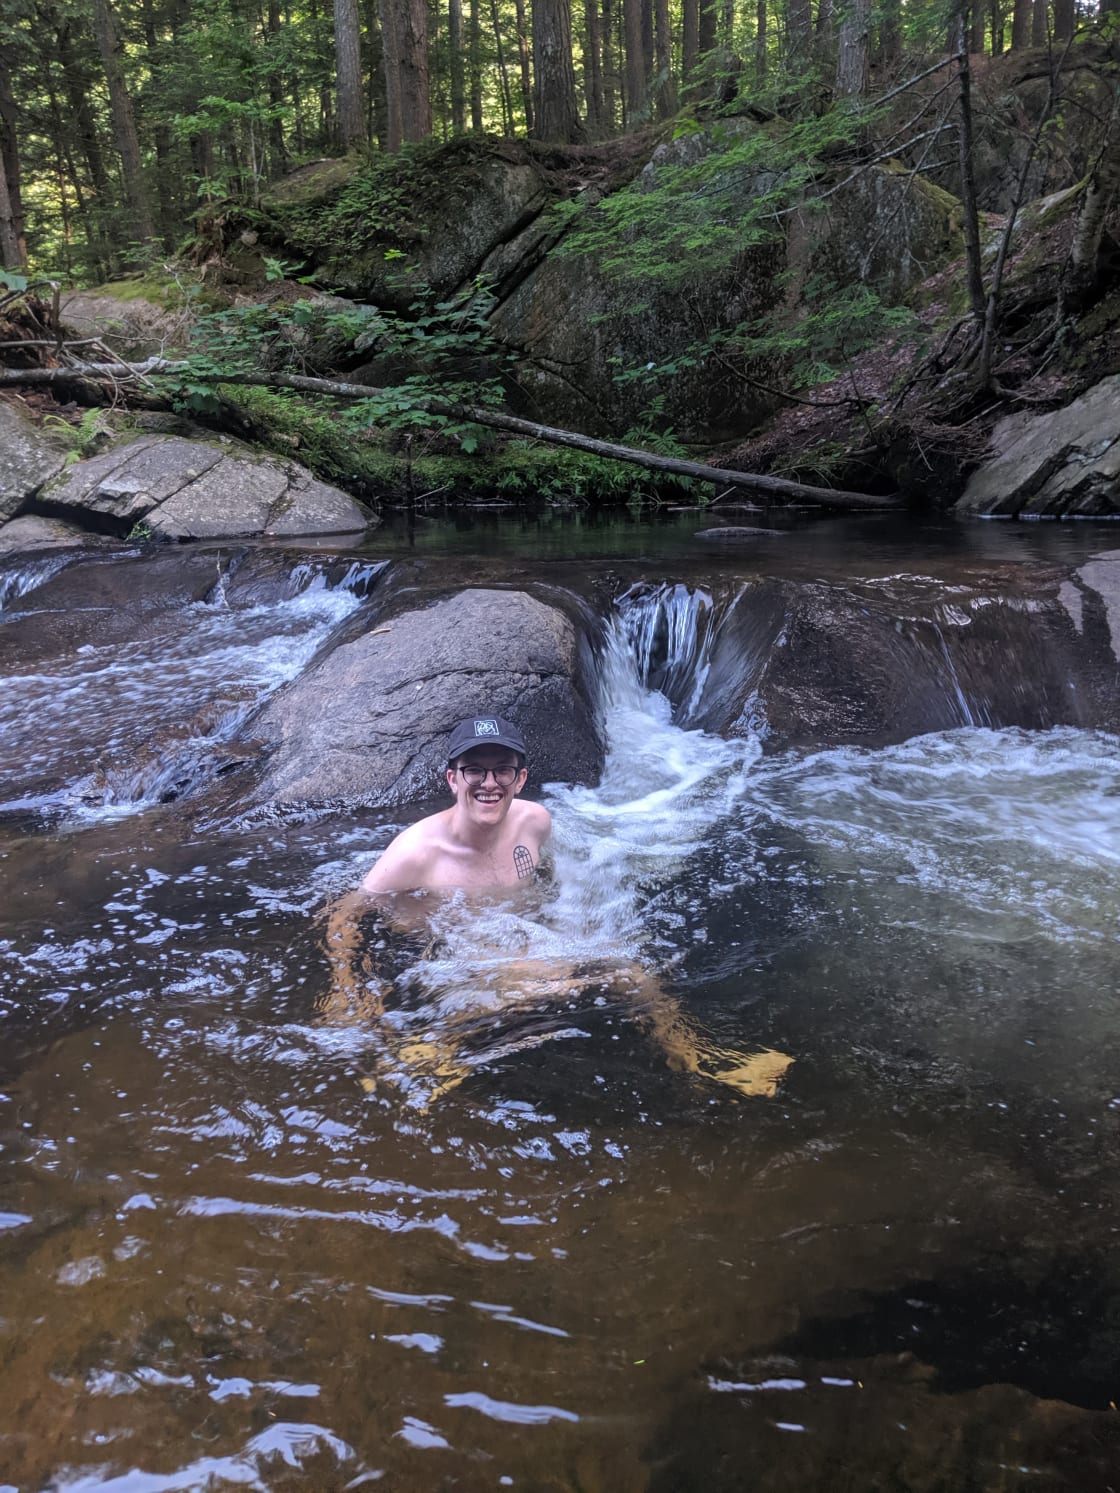 Sean in "the bath" part of "Buttermilk Falls"